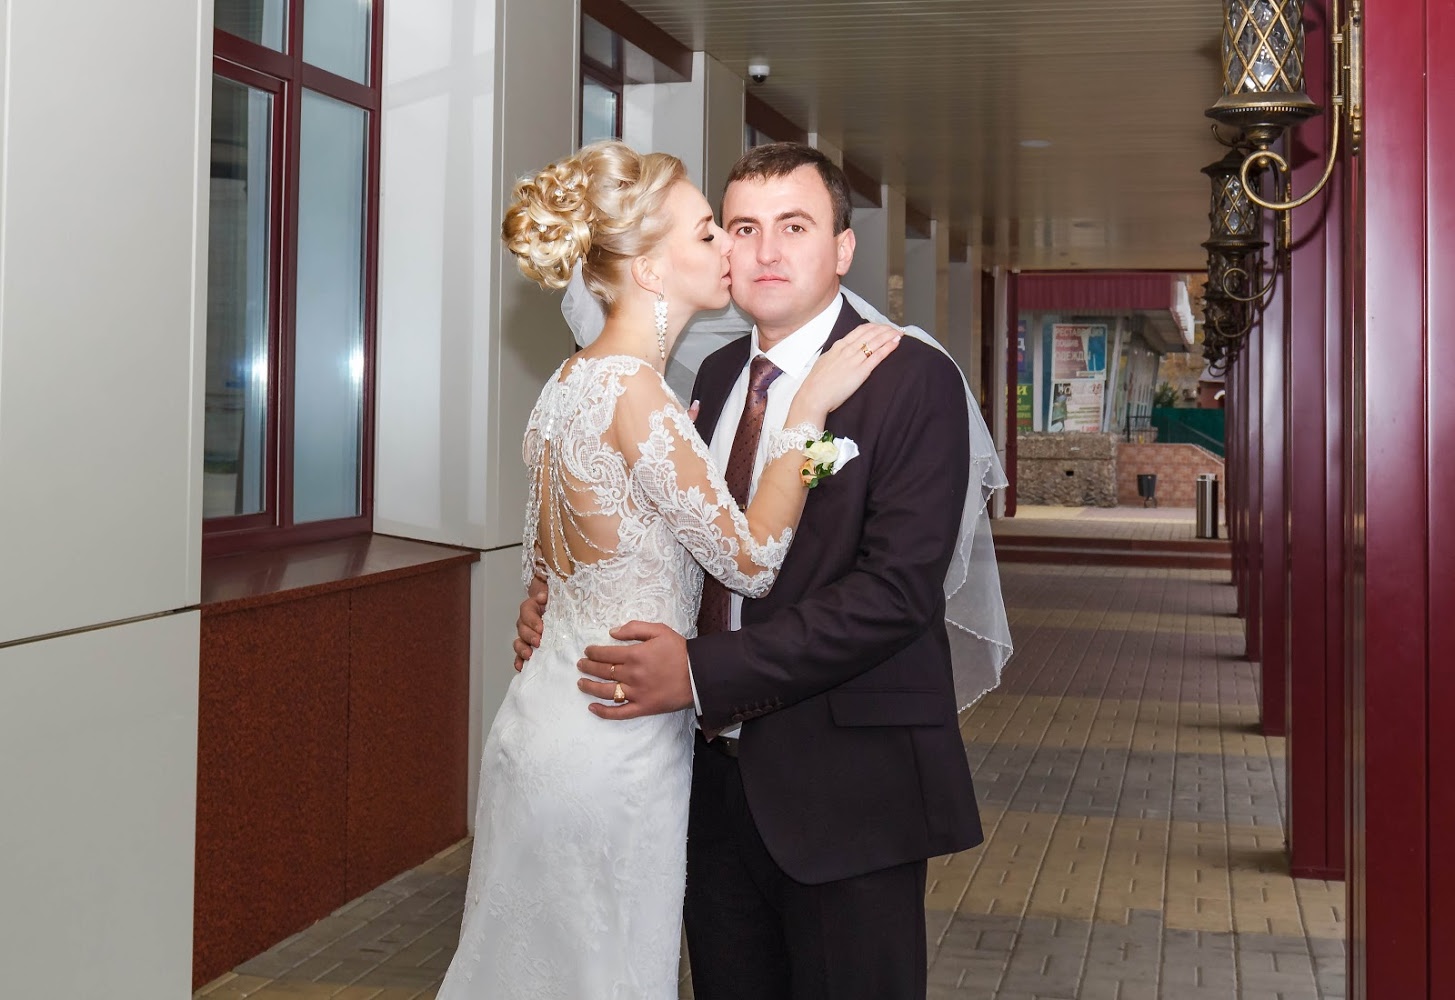 Петр Трифонов и Ольга Зайцева свадьба